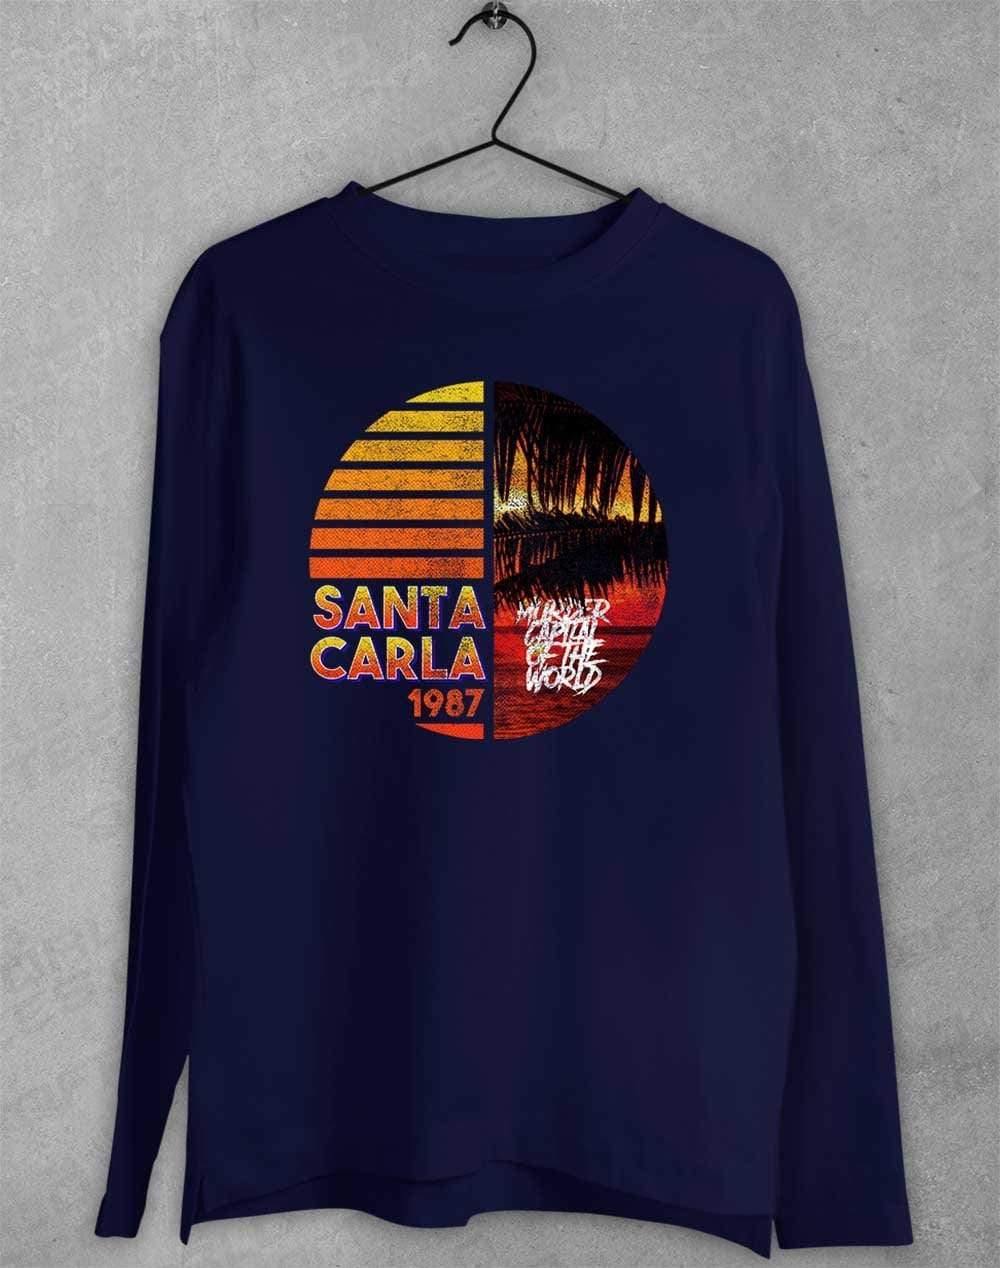 Santa Carla 1987 - Long Sleeve T-Shirt S / Navy  - Off World Tees